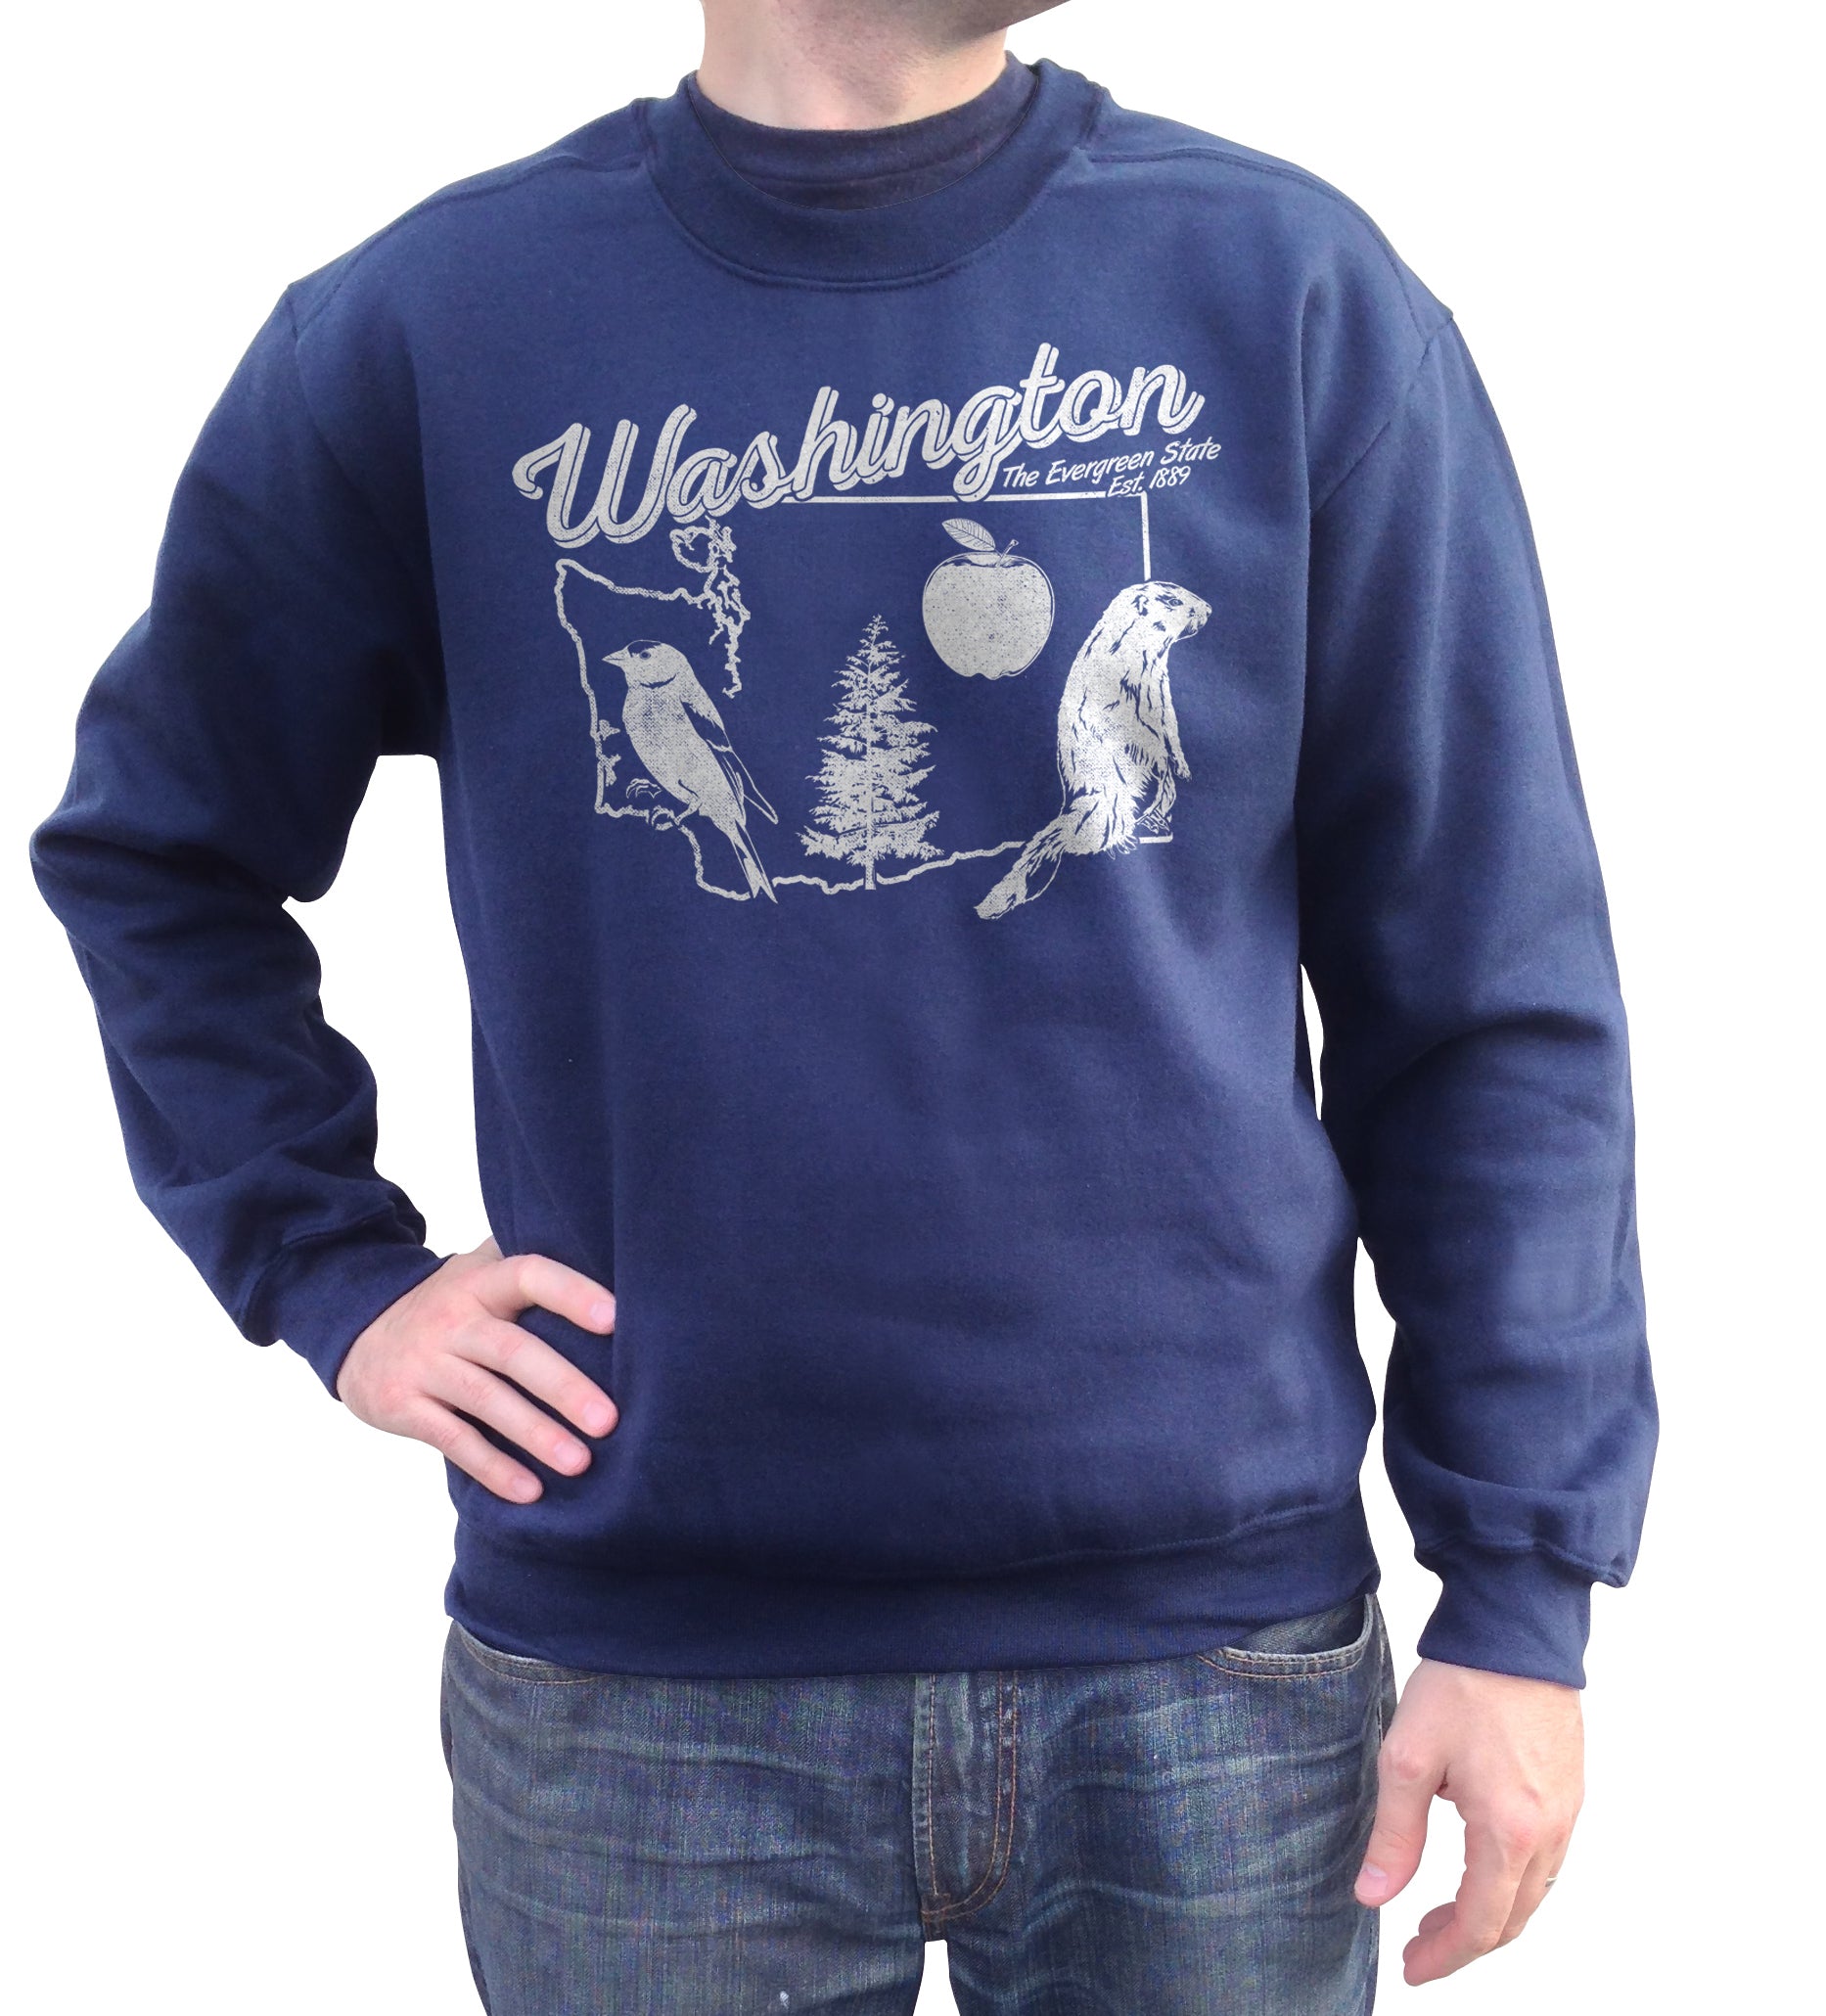 Unisex Vintage Washington Sweatshirt